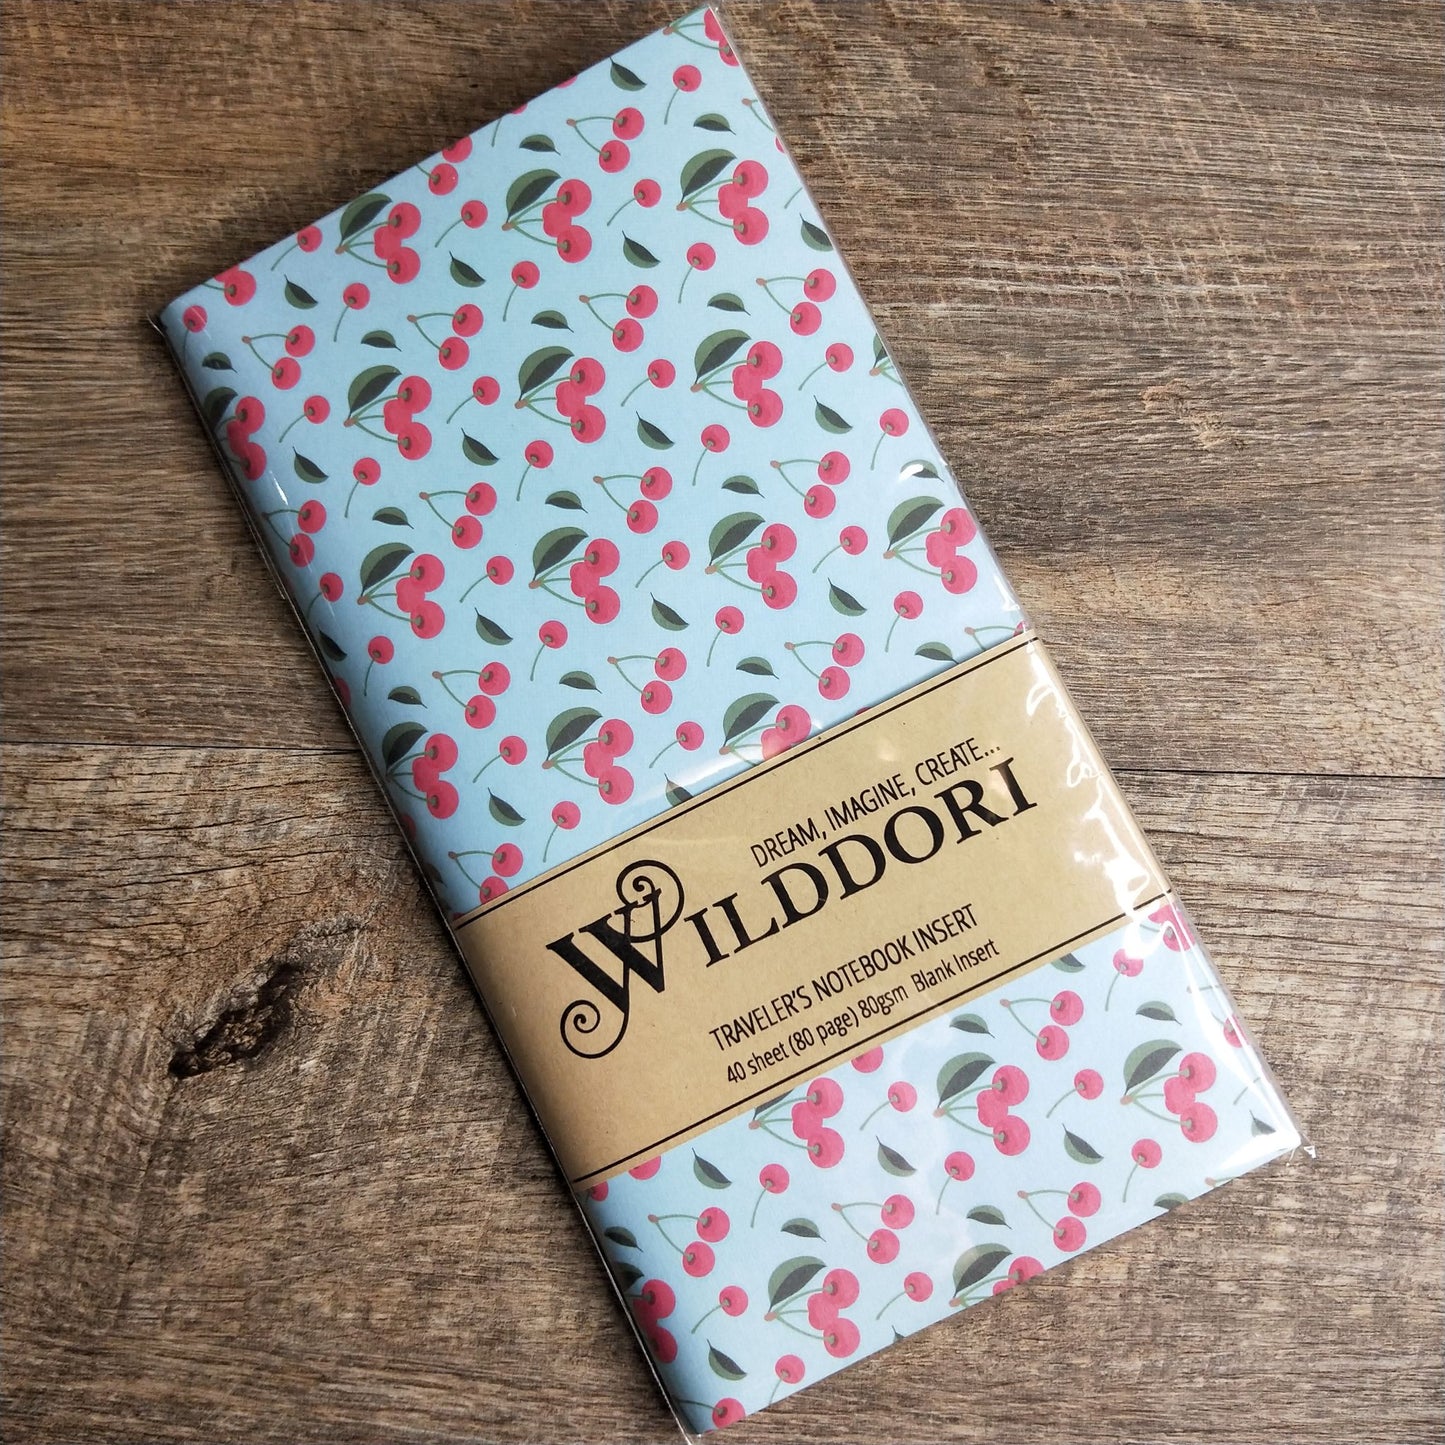 Wilddori 40 sheet Blank Insert - Sweet Cherry